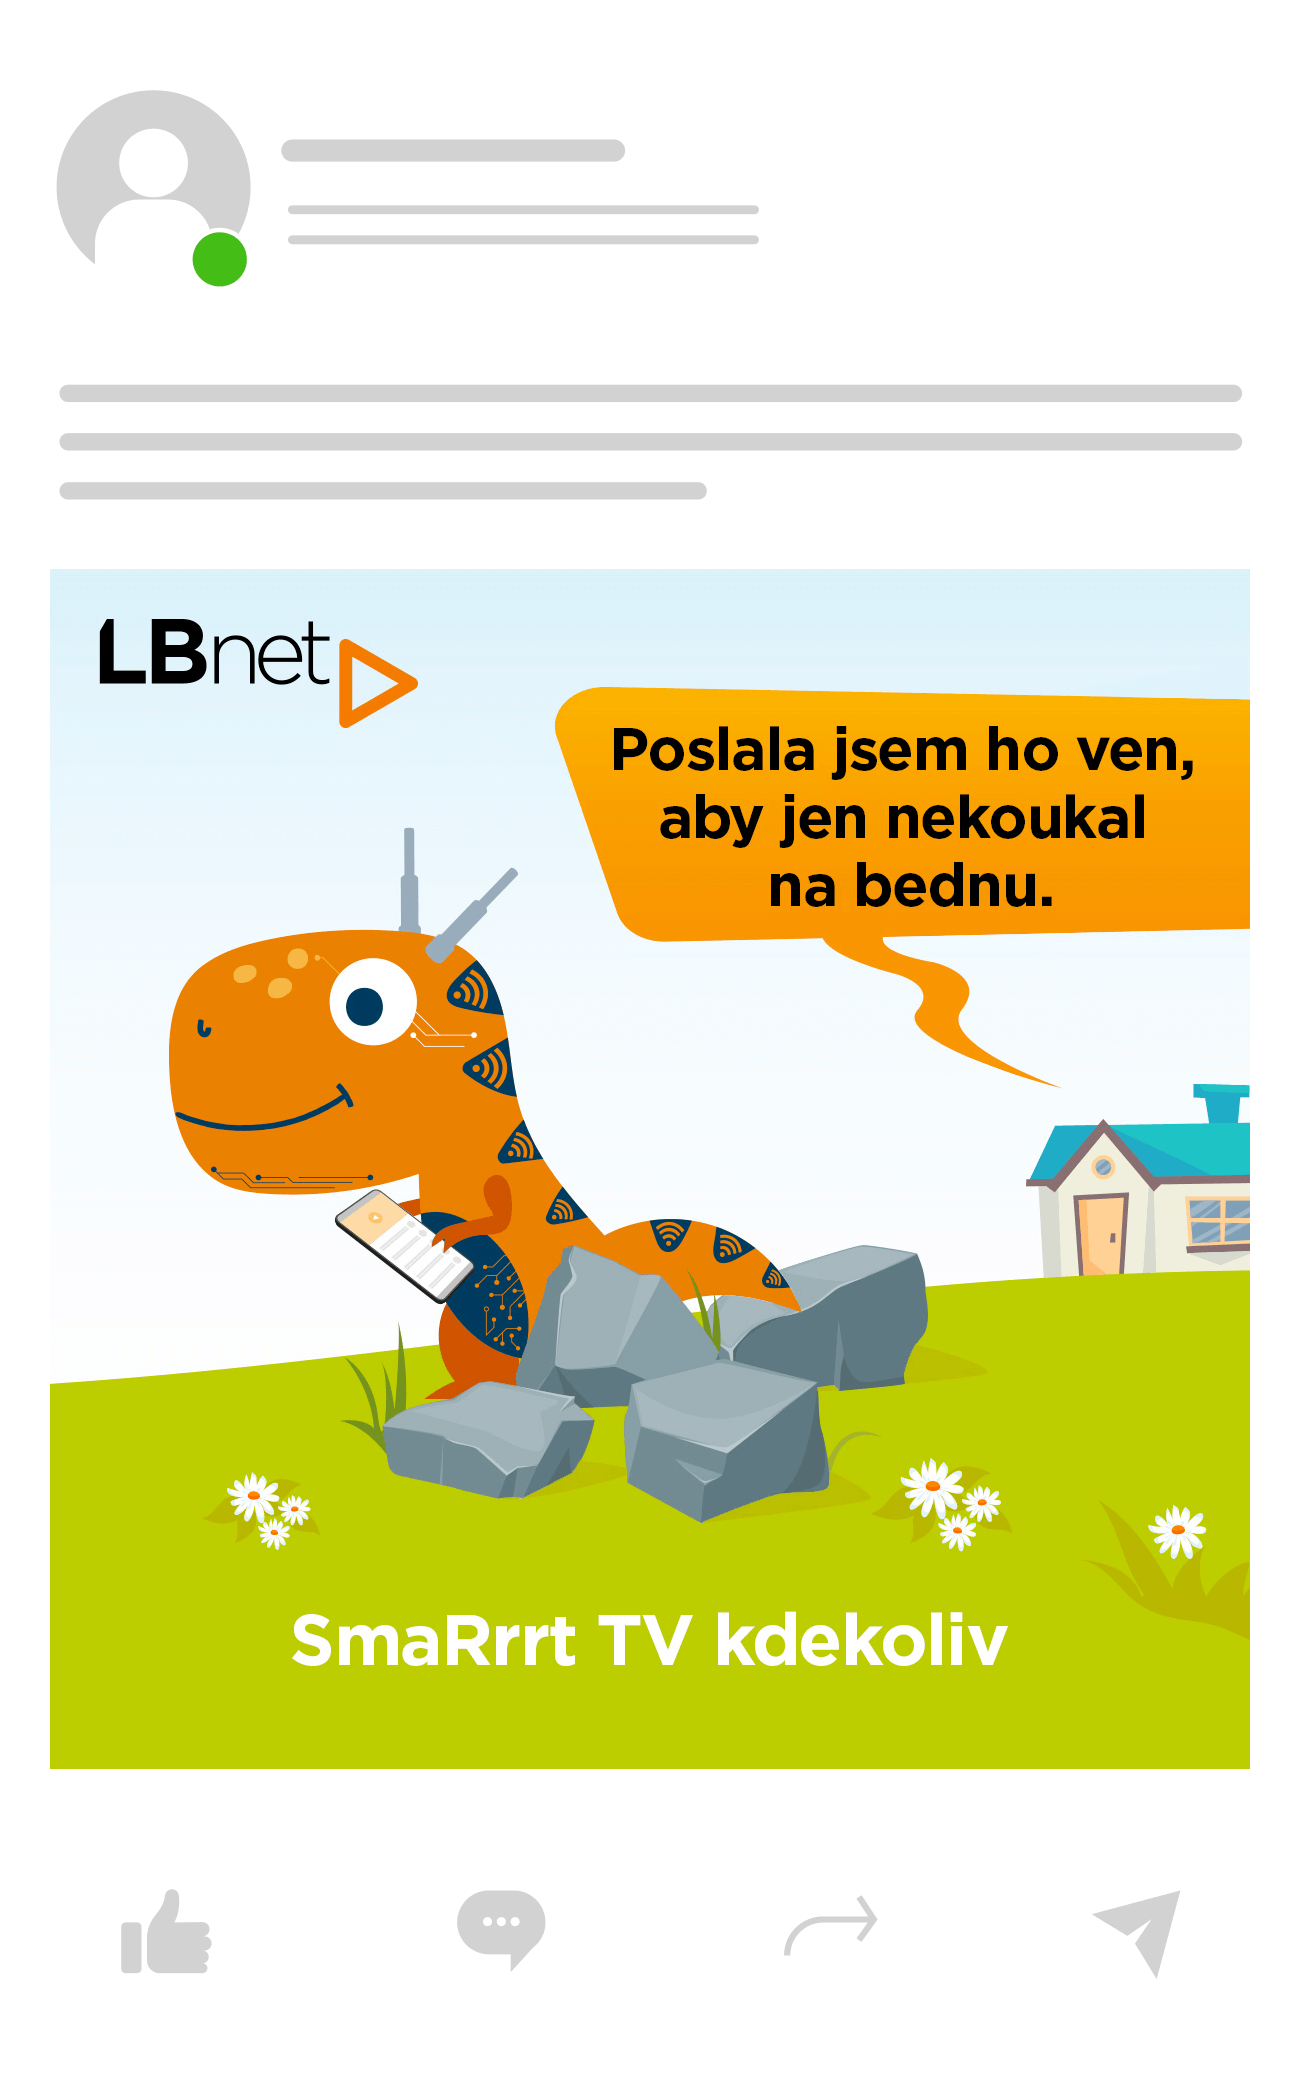 Post o smart tv